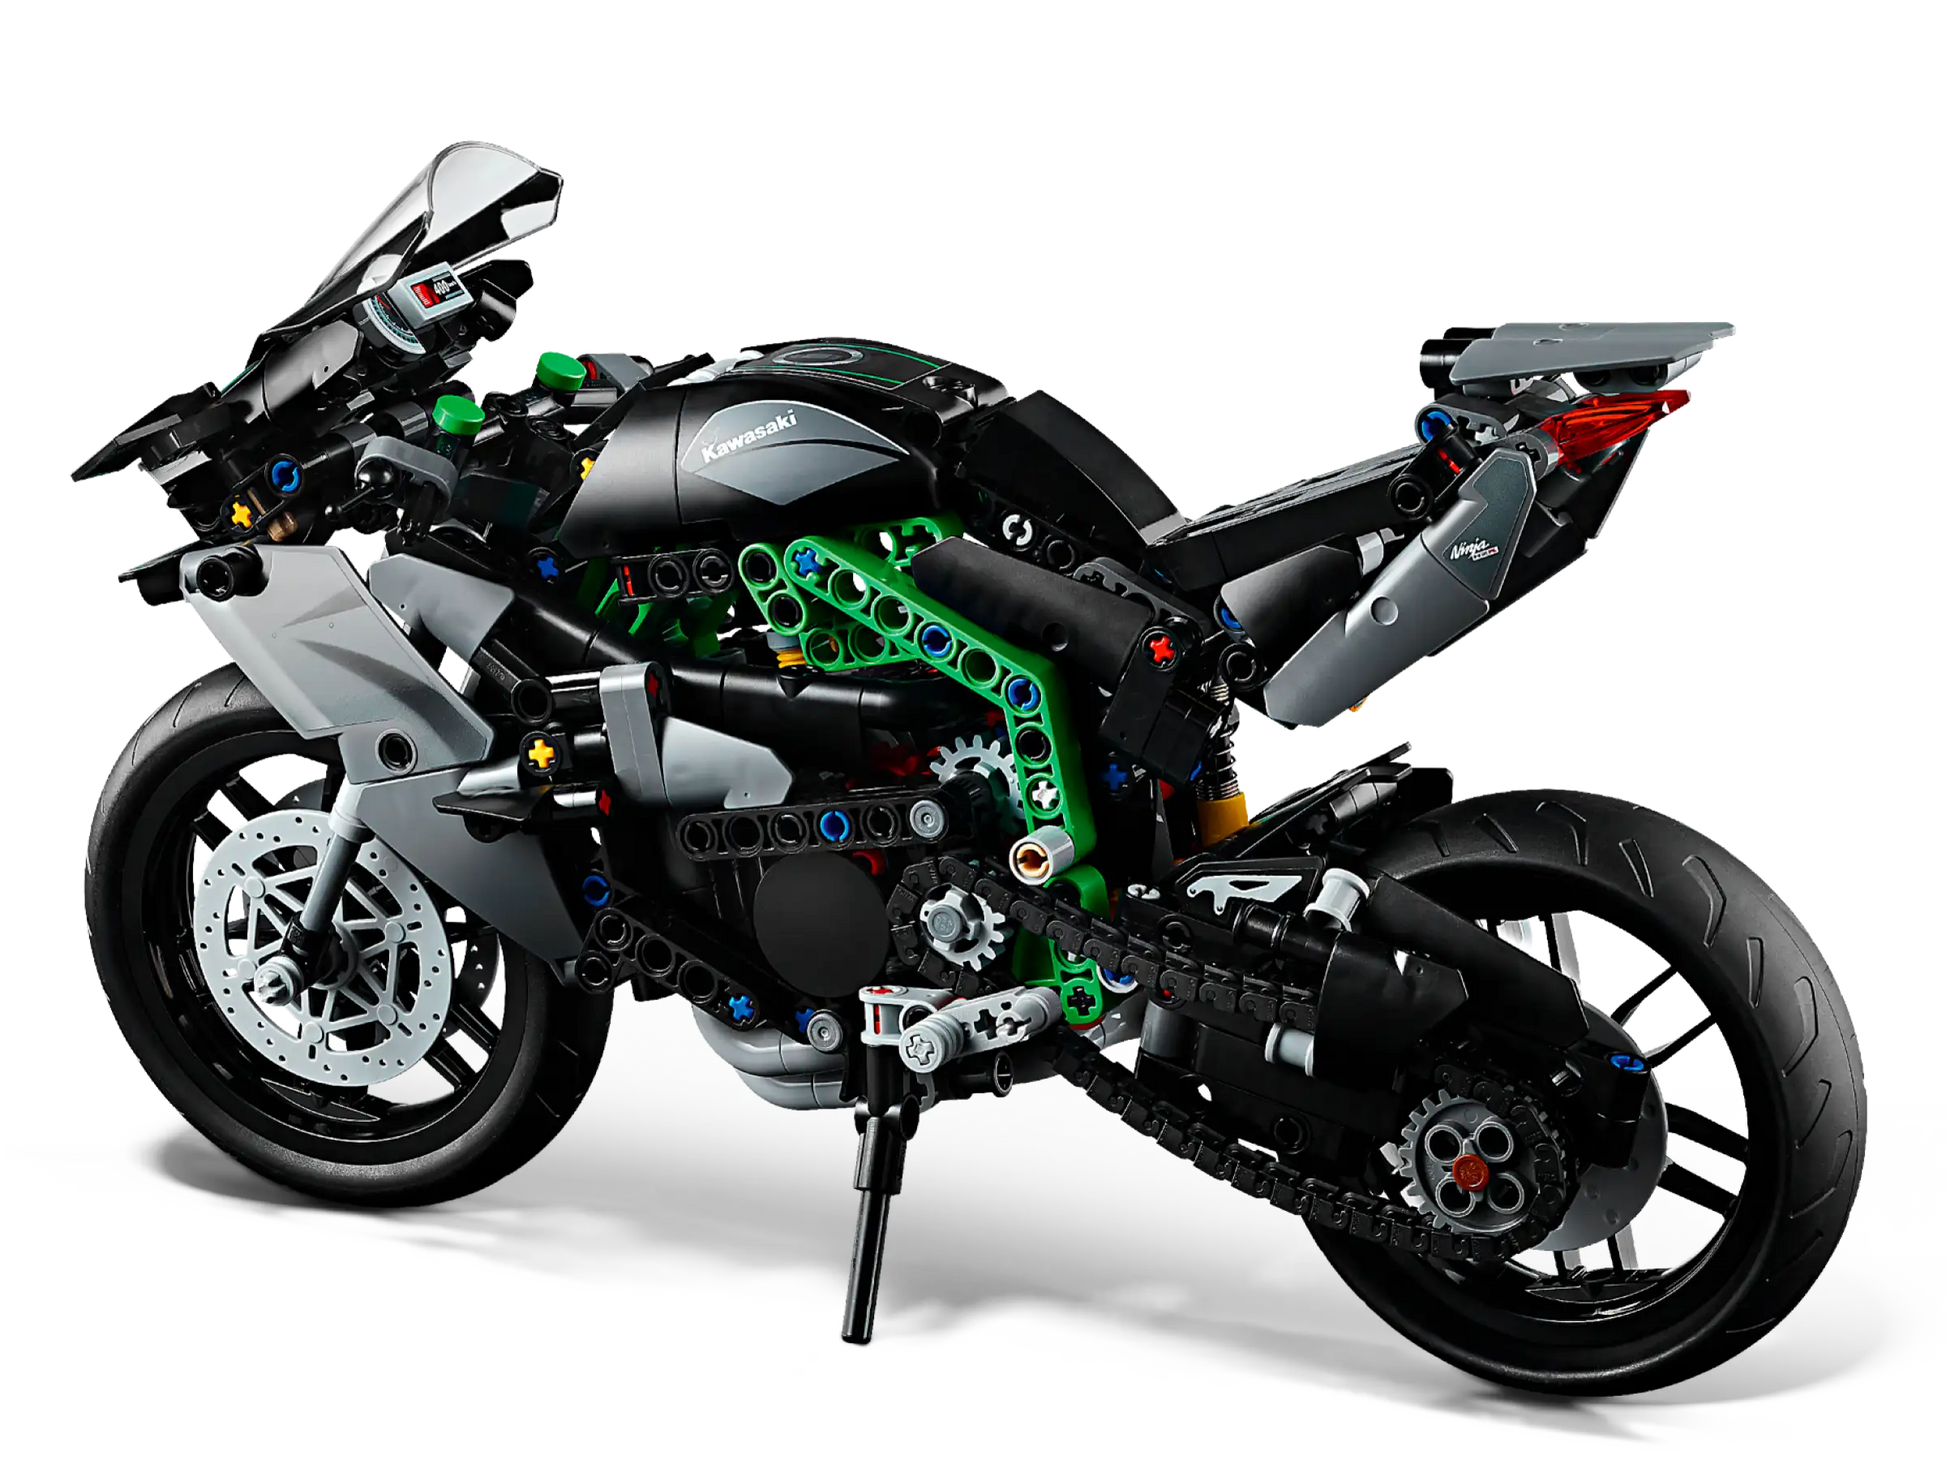 Lego Technic Kawasaki Ninja H2R Motorcycle 42170